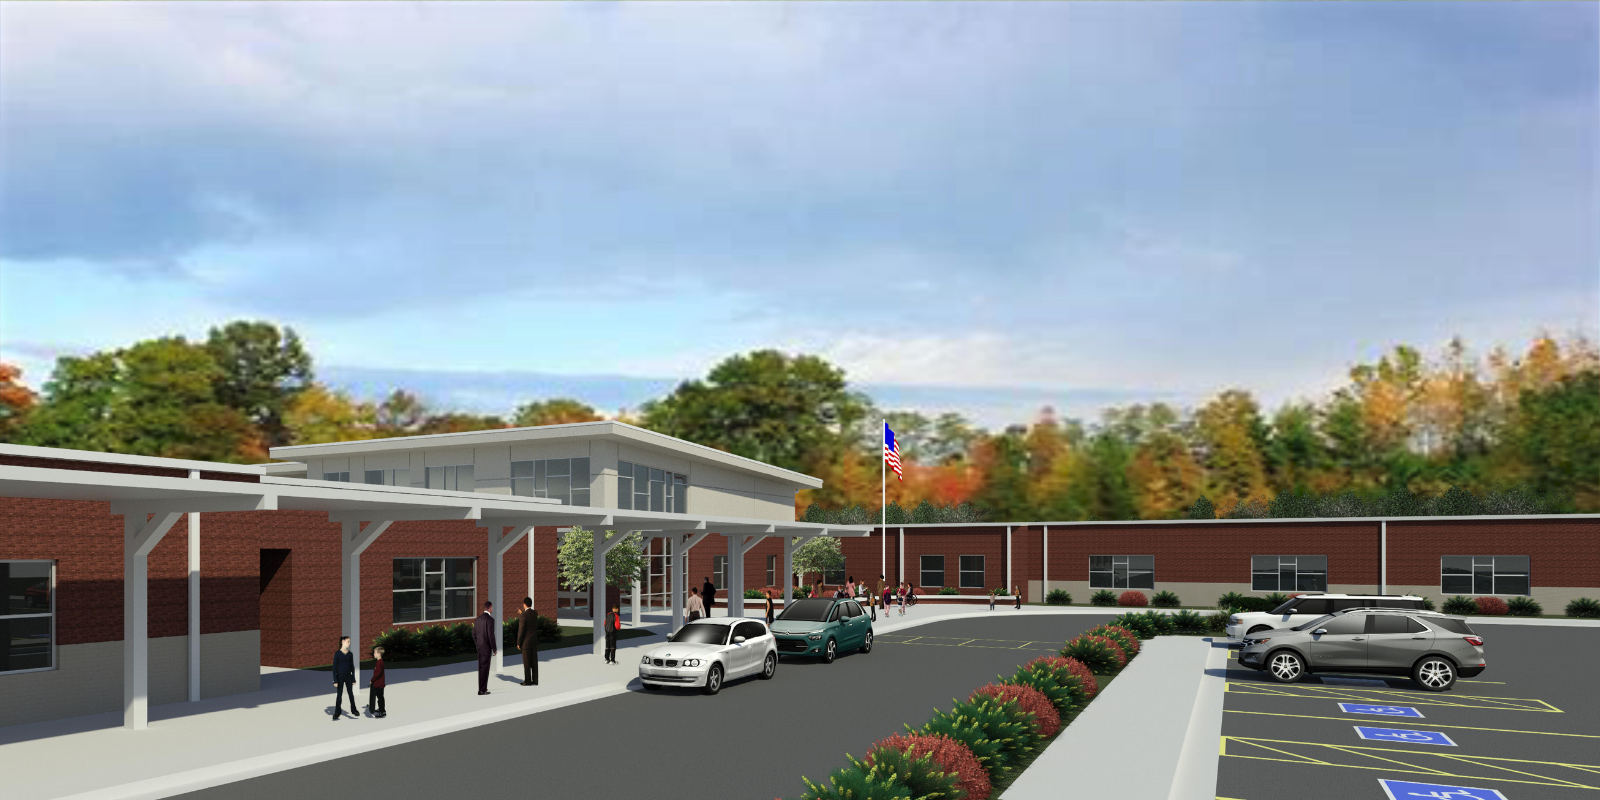 New elementary school rendering